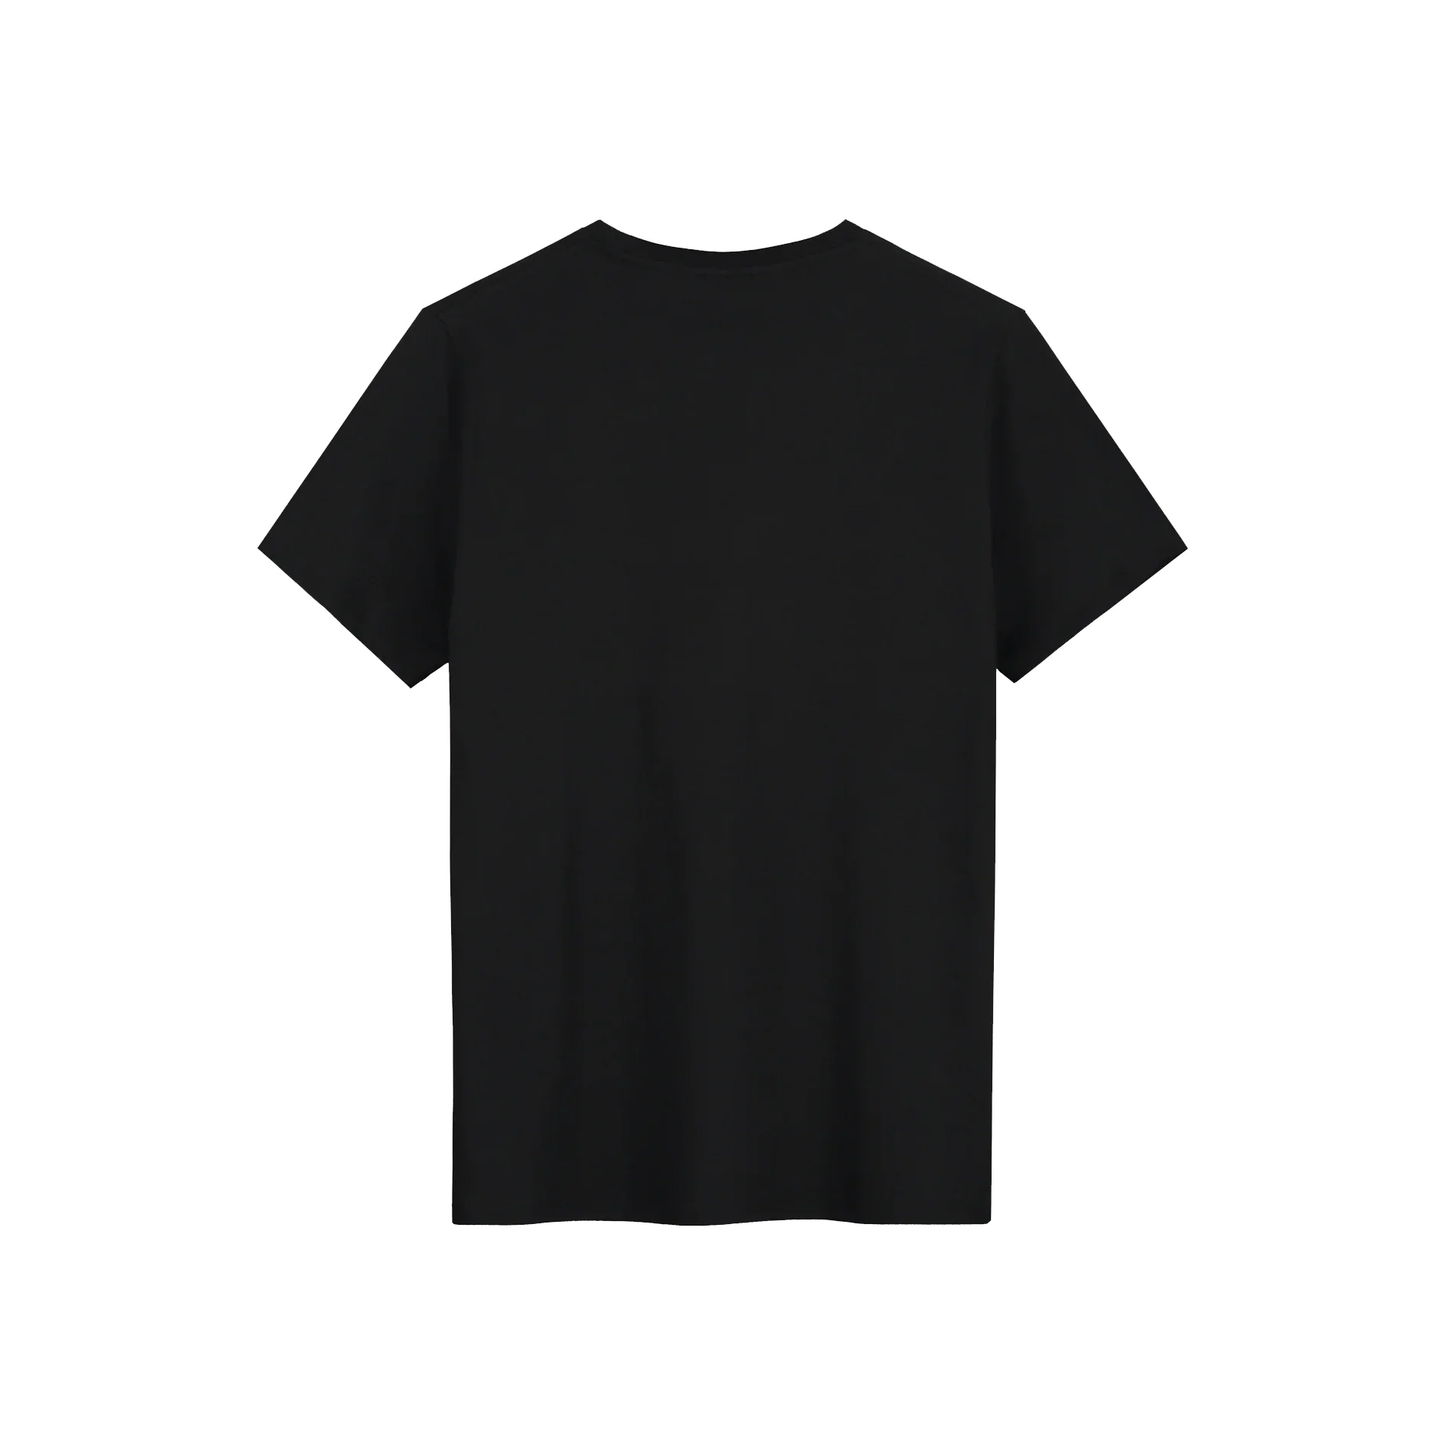 B-17 T-shirt Black